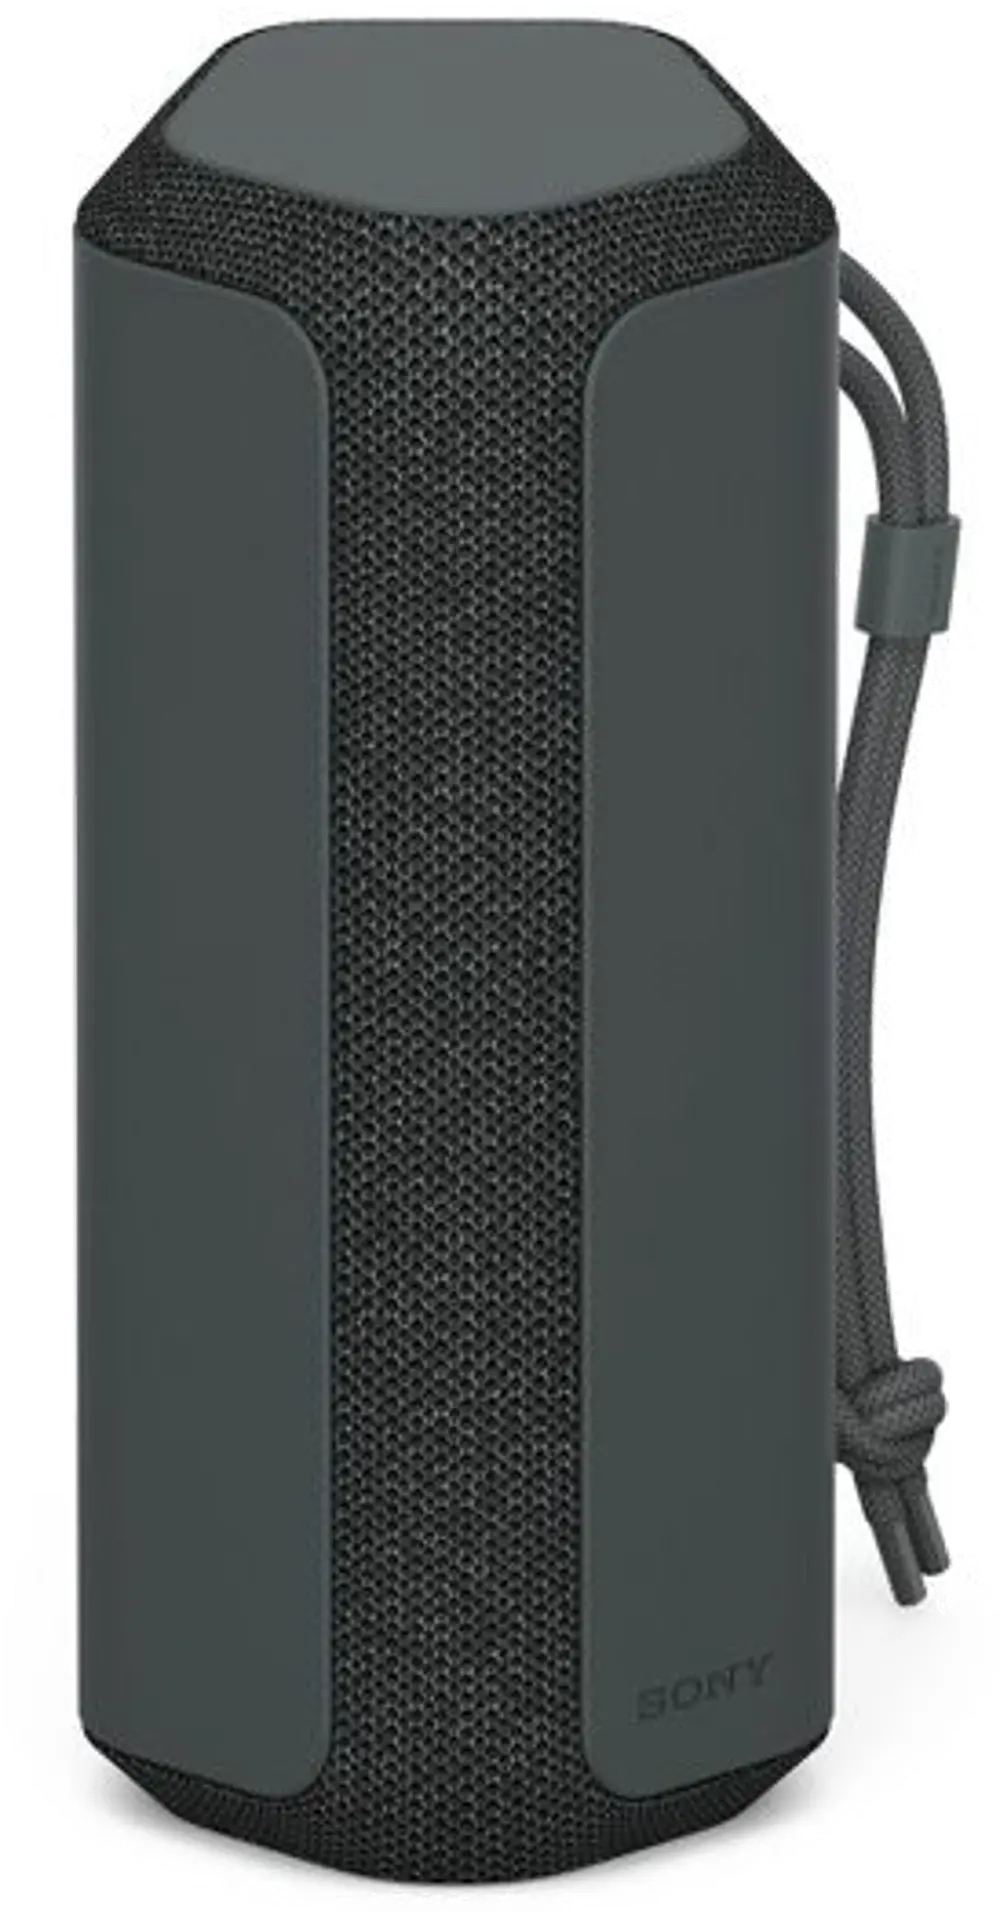 SRSXE200/B Sony - SRSXE200 Portable X-Series Bluetooth Speaker - Black-1